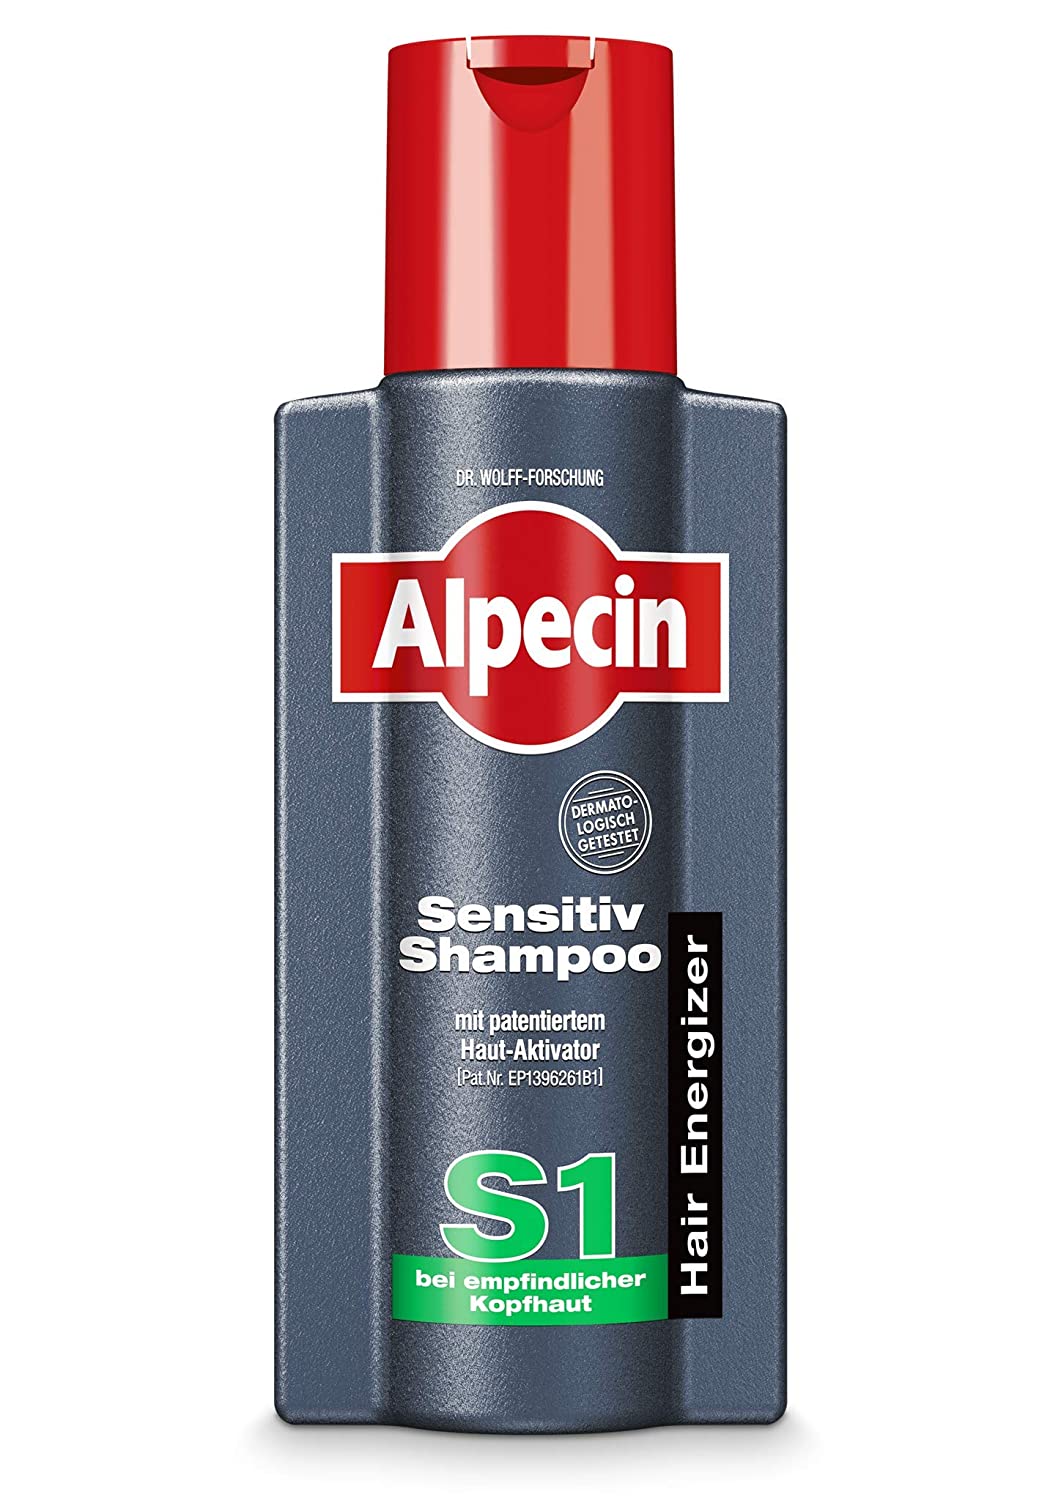 Alpecin Sensitive Shampoo S1, 250 ml